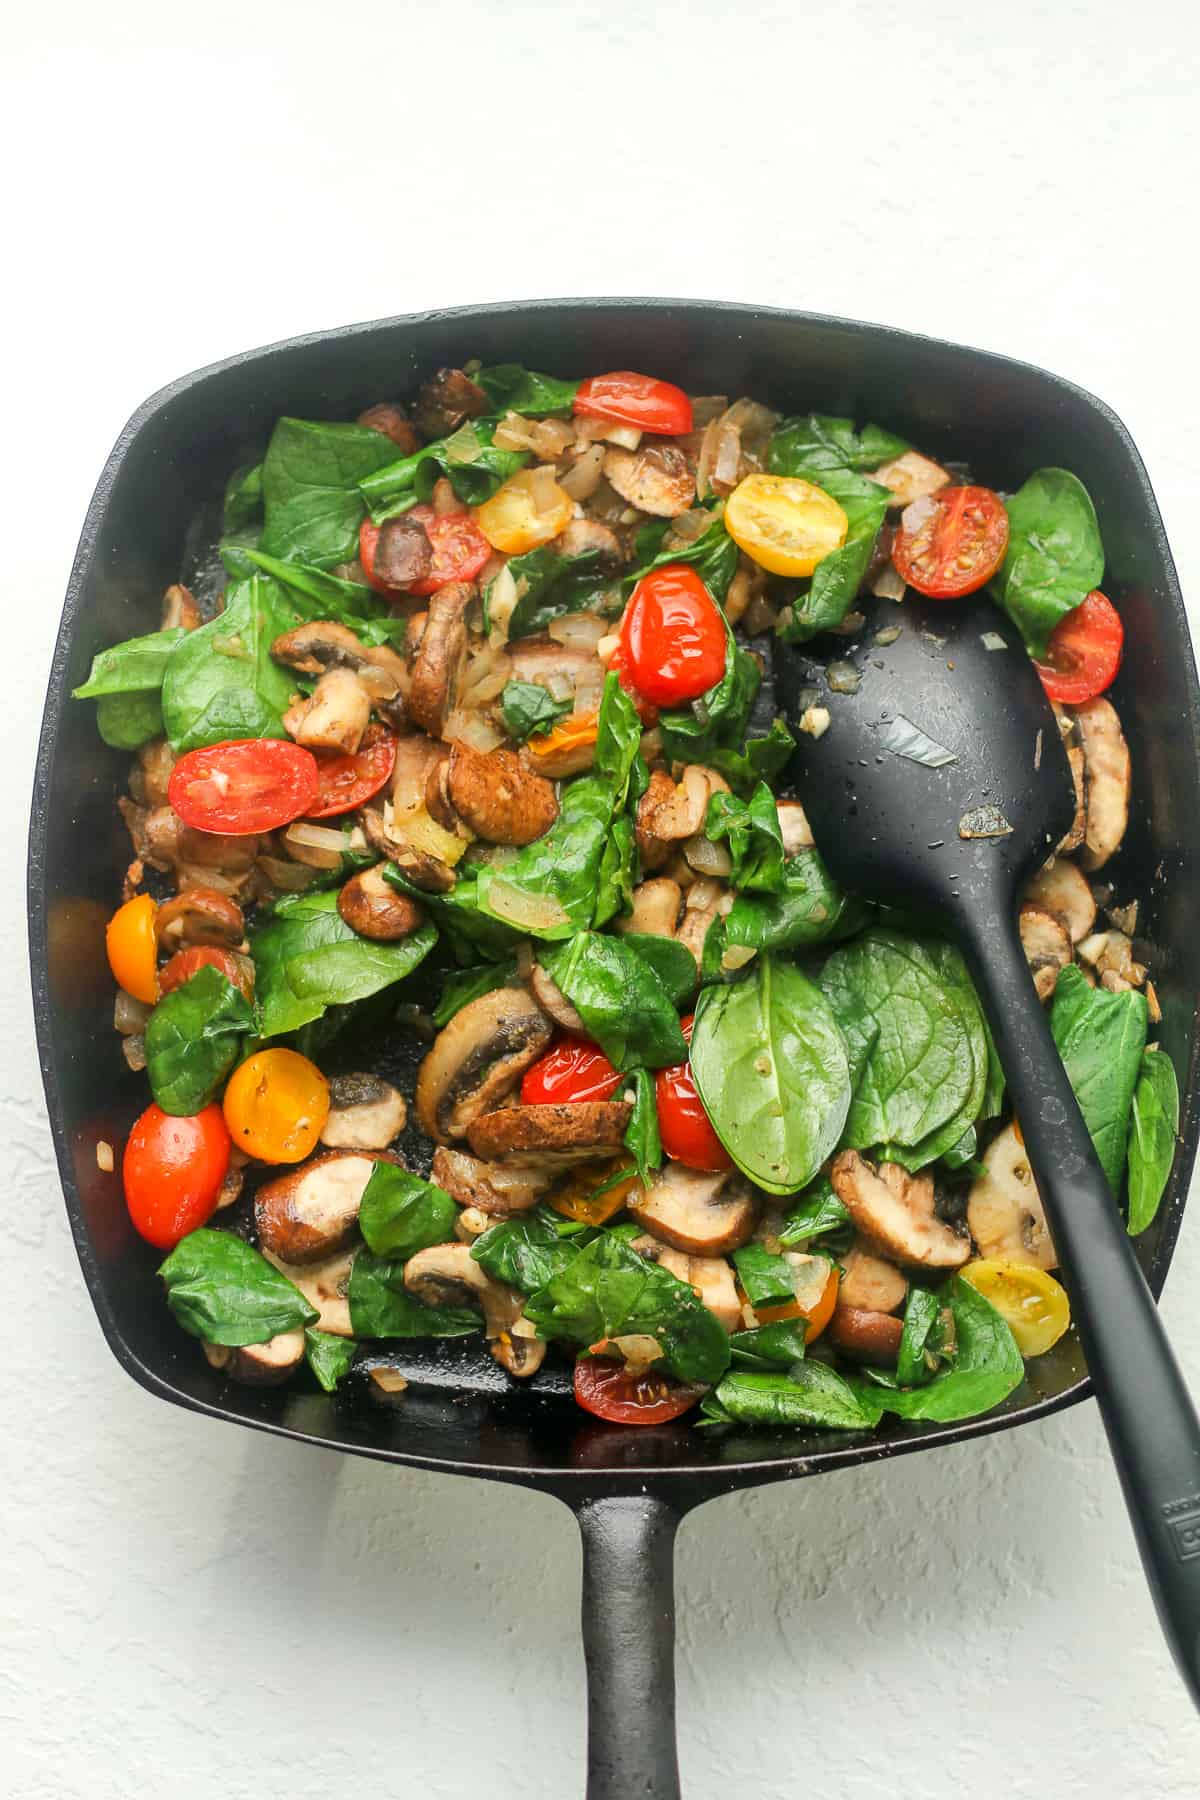 A square cast iron pan with sautéed veggies.